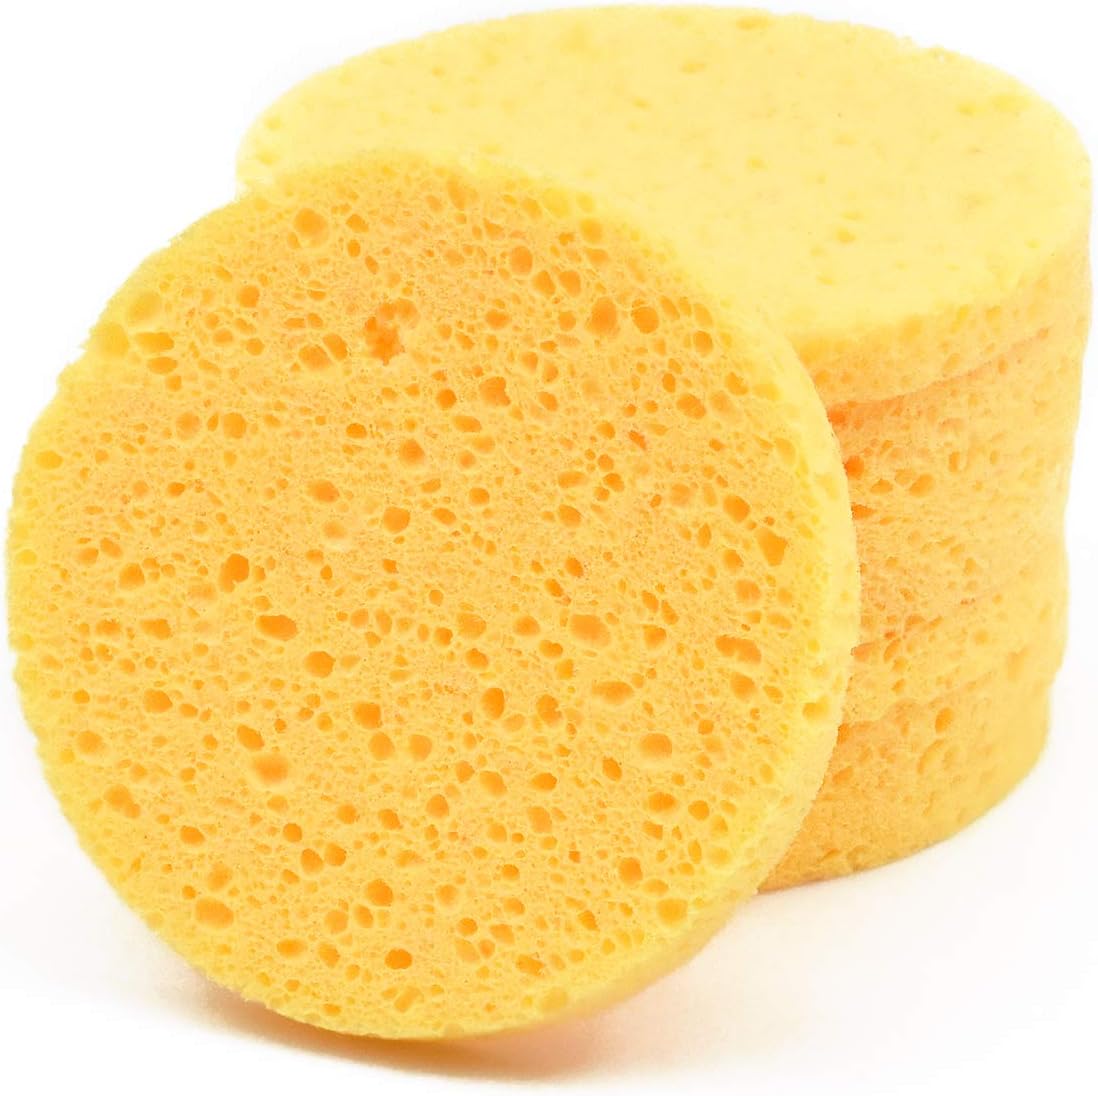 10 Pcs Facial Sponges, Cellulose Face Sponge, Face Cleansing Washing Sponges, Make Up Remover Sponges Pads, Beauty Sponges for Facial SPA Massage Makeup Removal (Yellow) (Round)